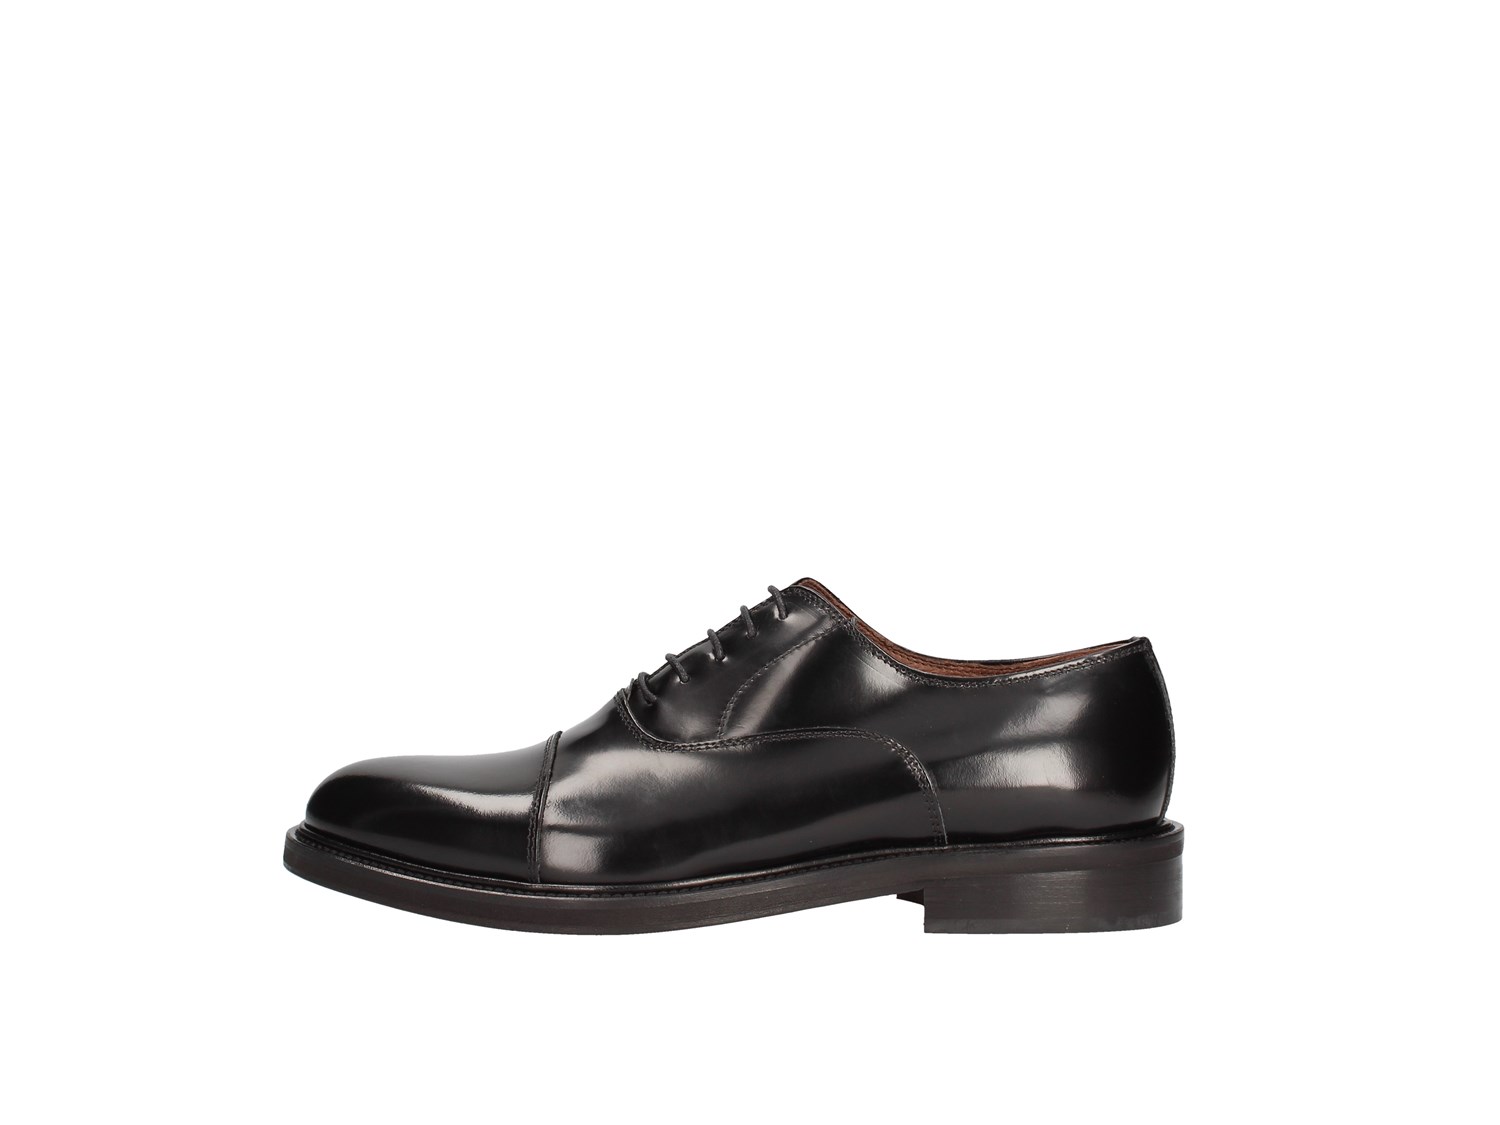 J.b.willis 854 Black Shoes Man Classic shoe